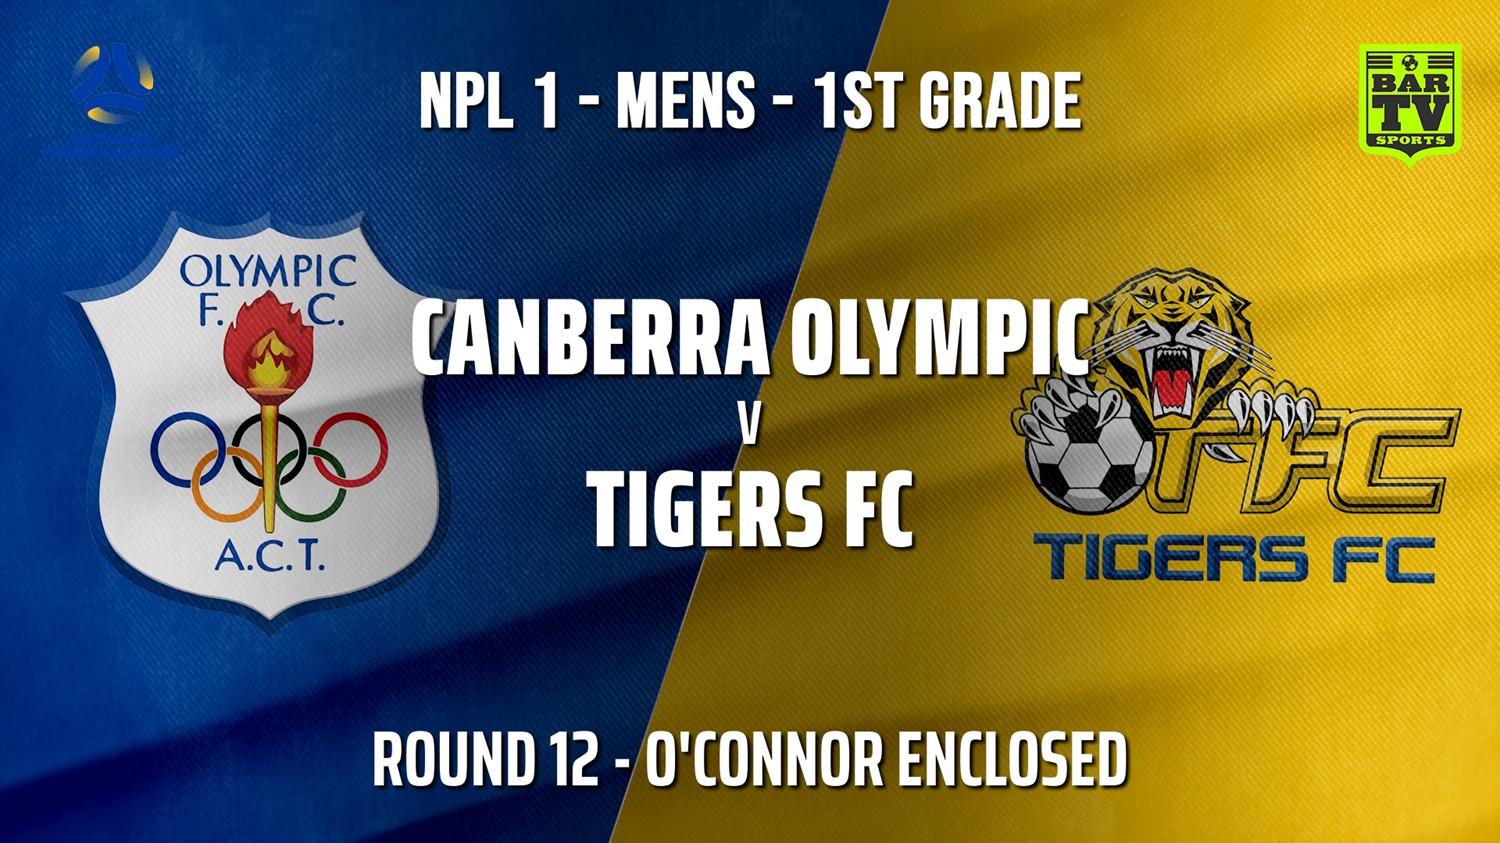 210703-Capital NPL Round 12 - Canberra Olympic FC v Tigers FC Minigame Slate Image